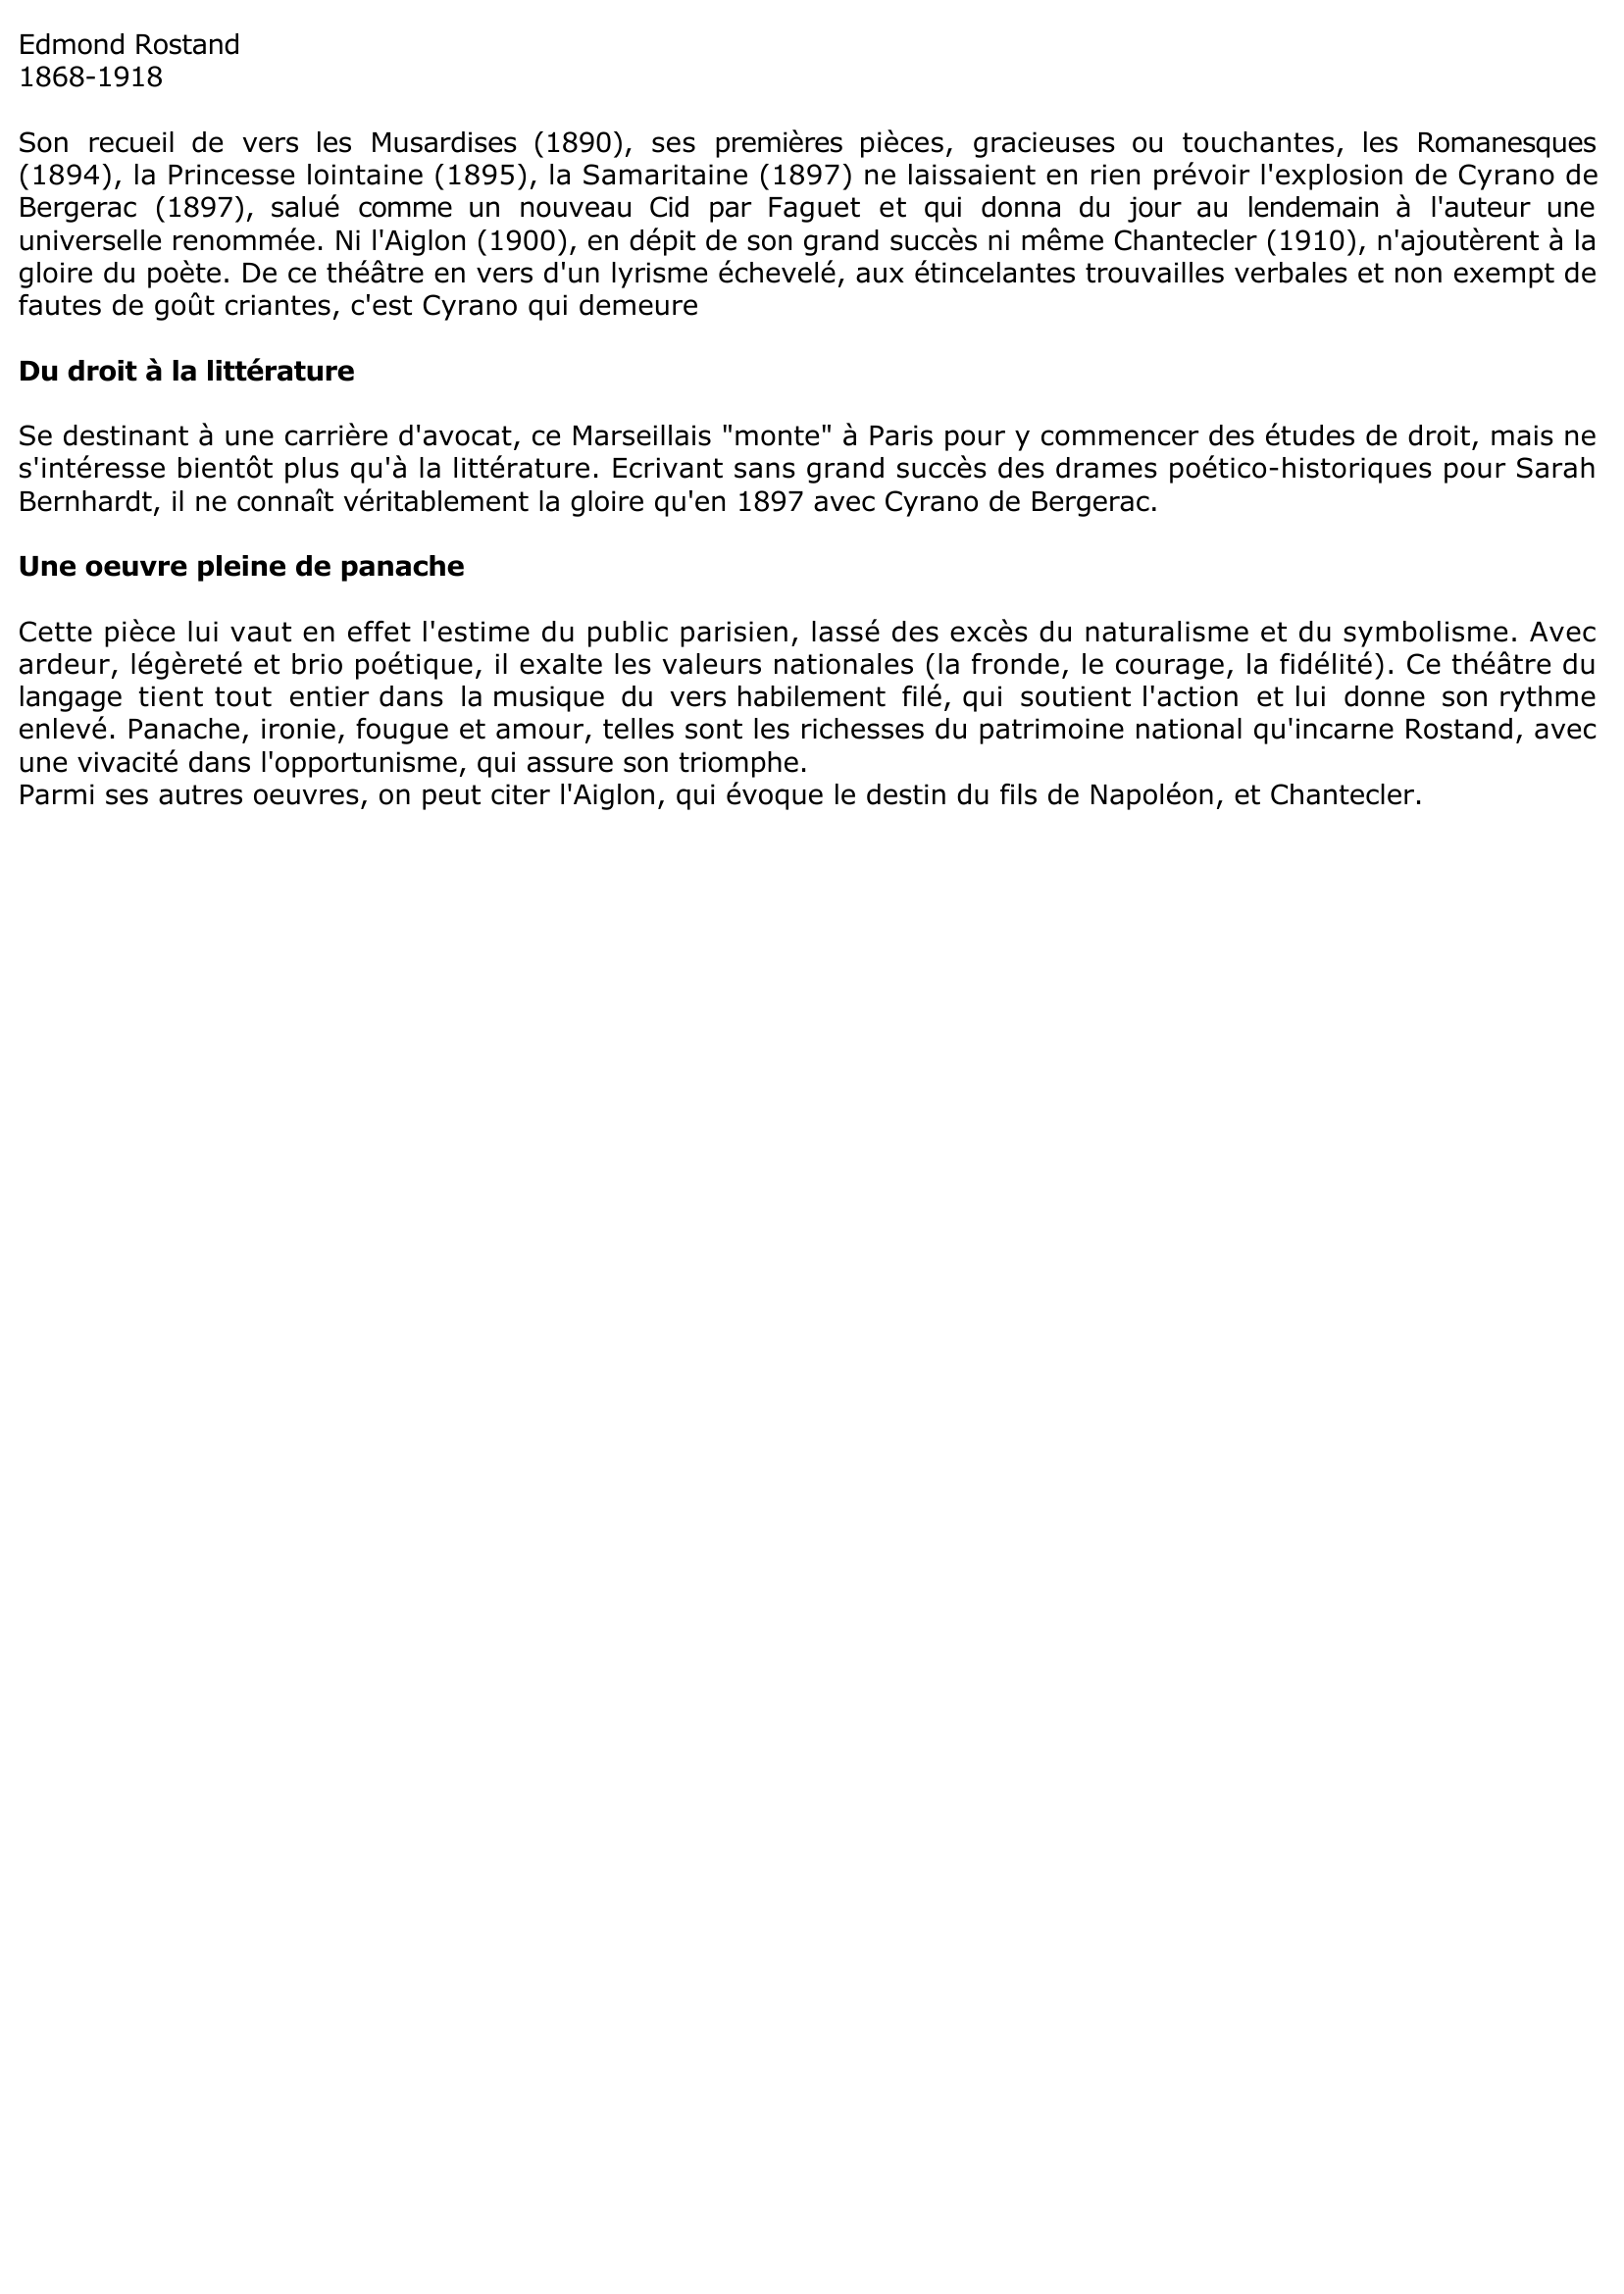 Prévisualisation du document Edmond Rostand